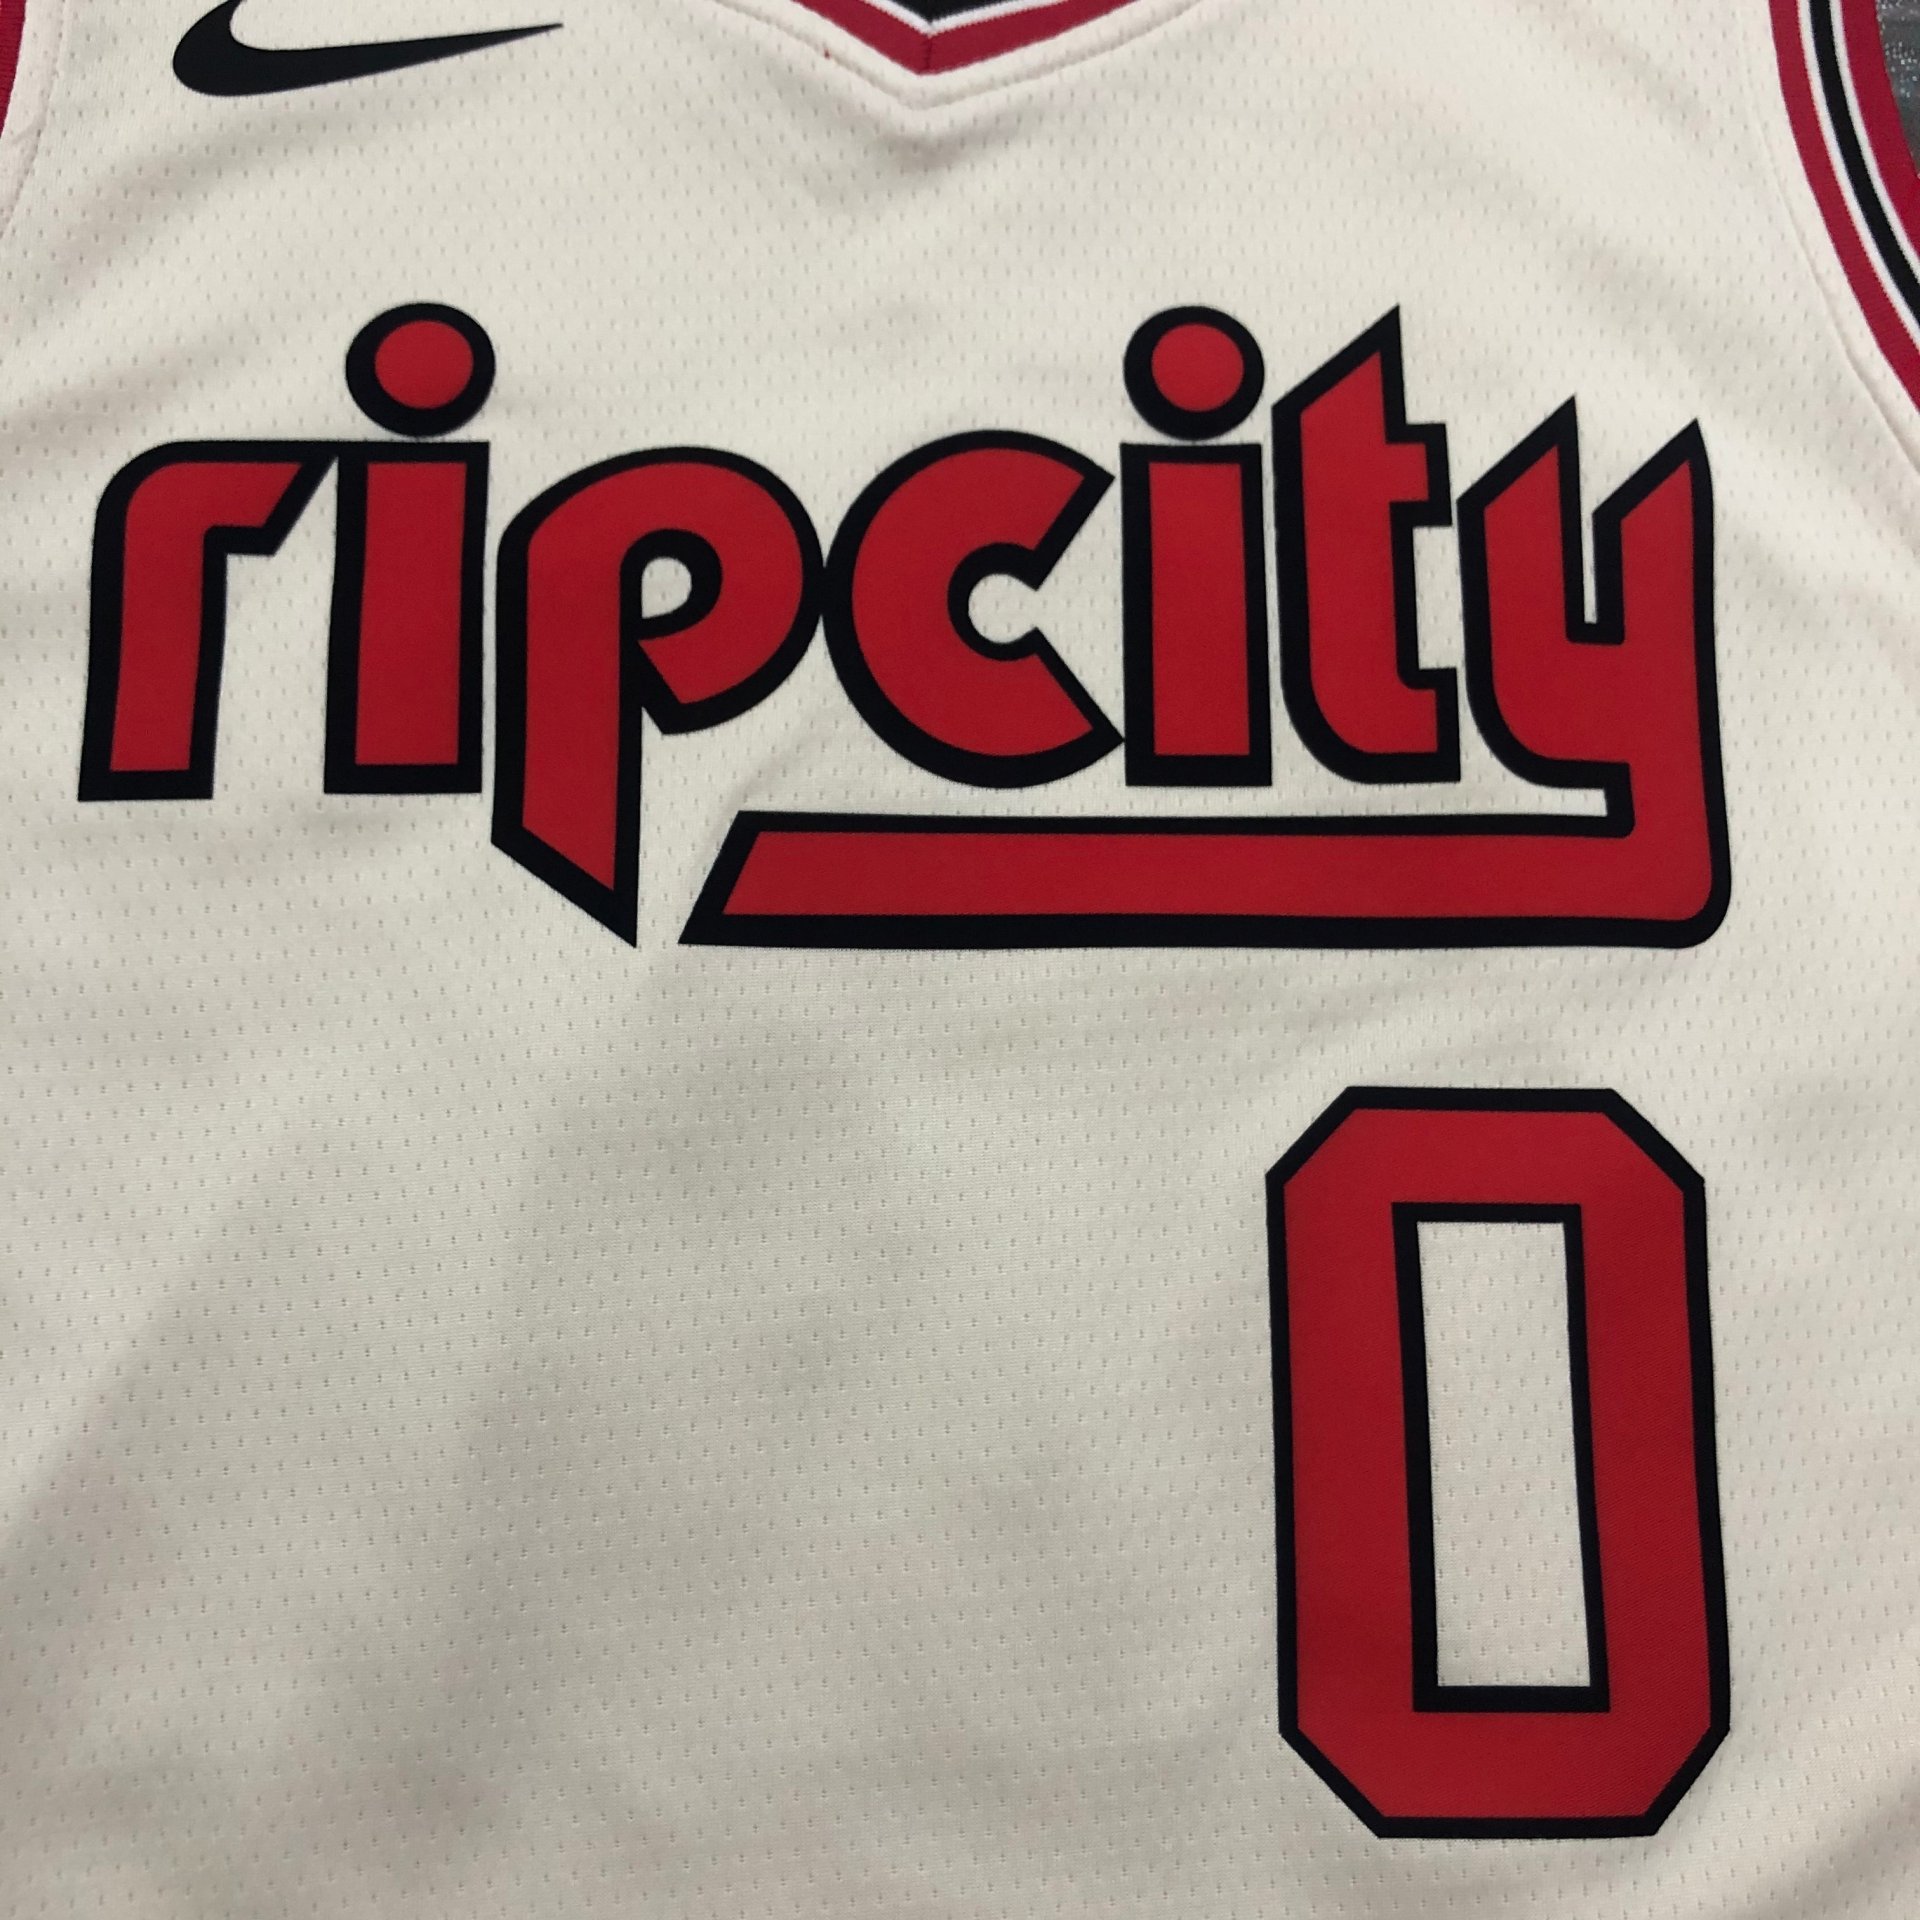 Damian Lillard Portland Trail Blazers City Edition Rip City jersey